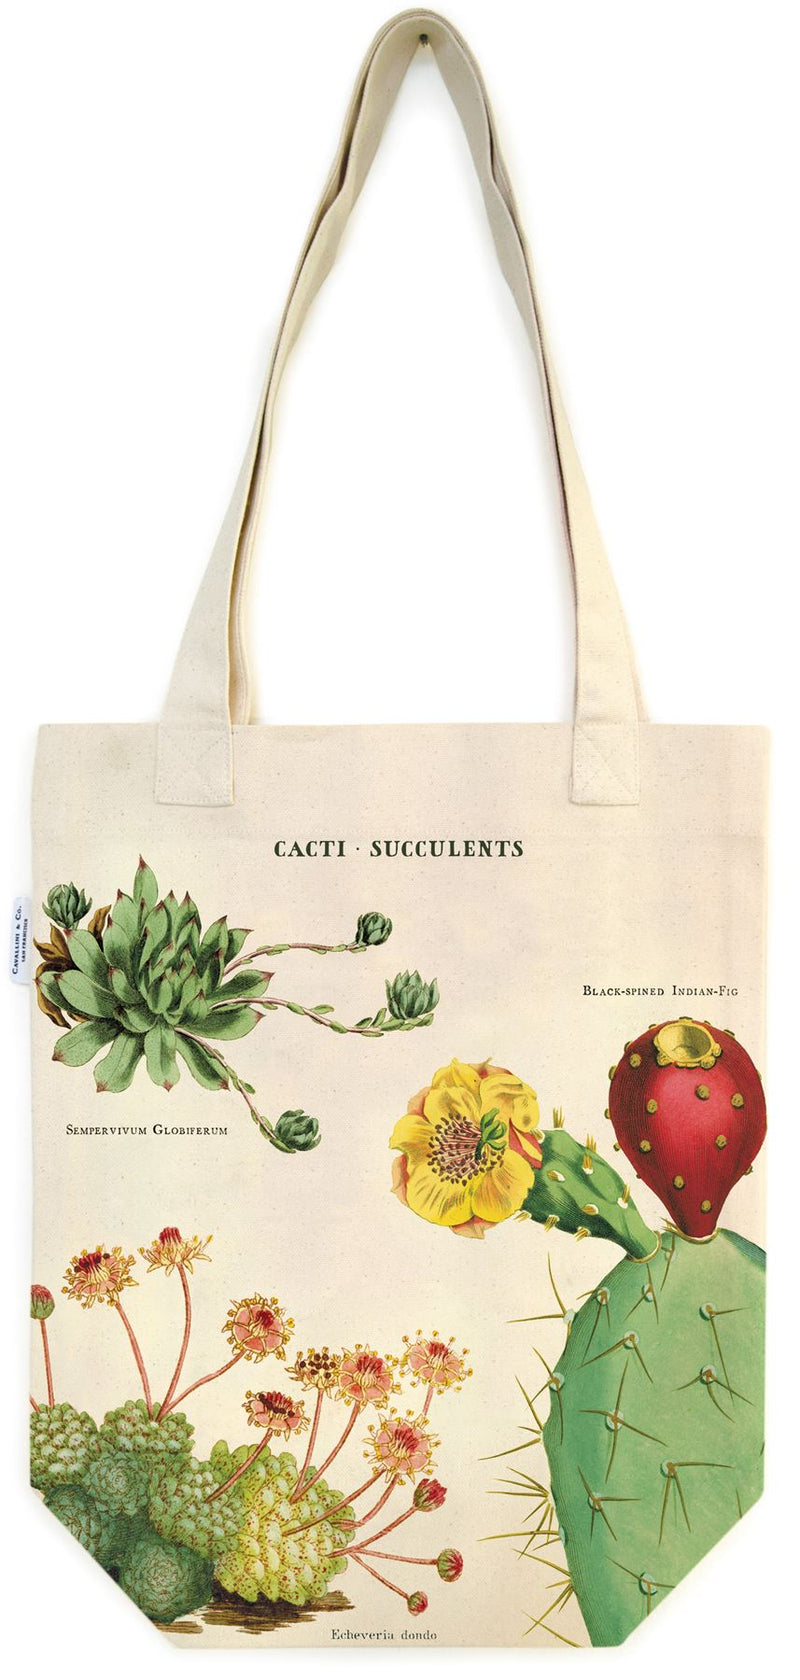 Cavallini - 100% Natural Cotton Vintage Tote Bag - 33x40.5cms - Cactus/Cacti/Succulents